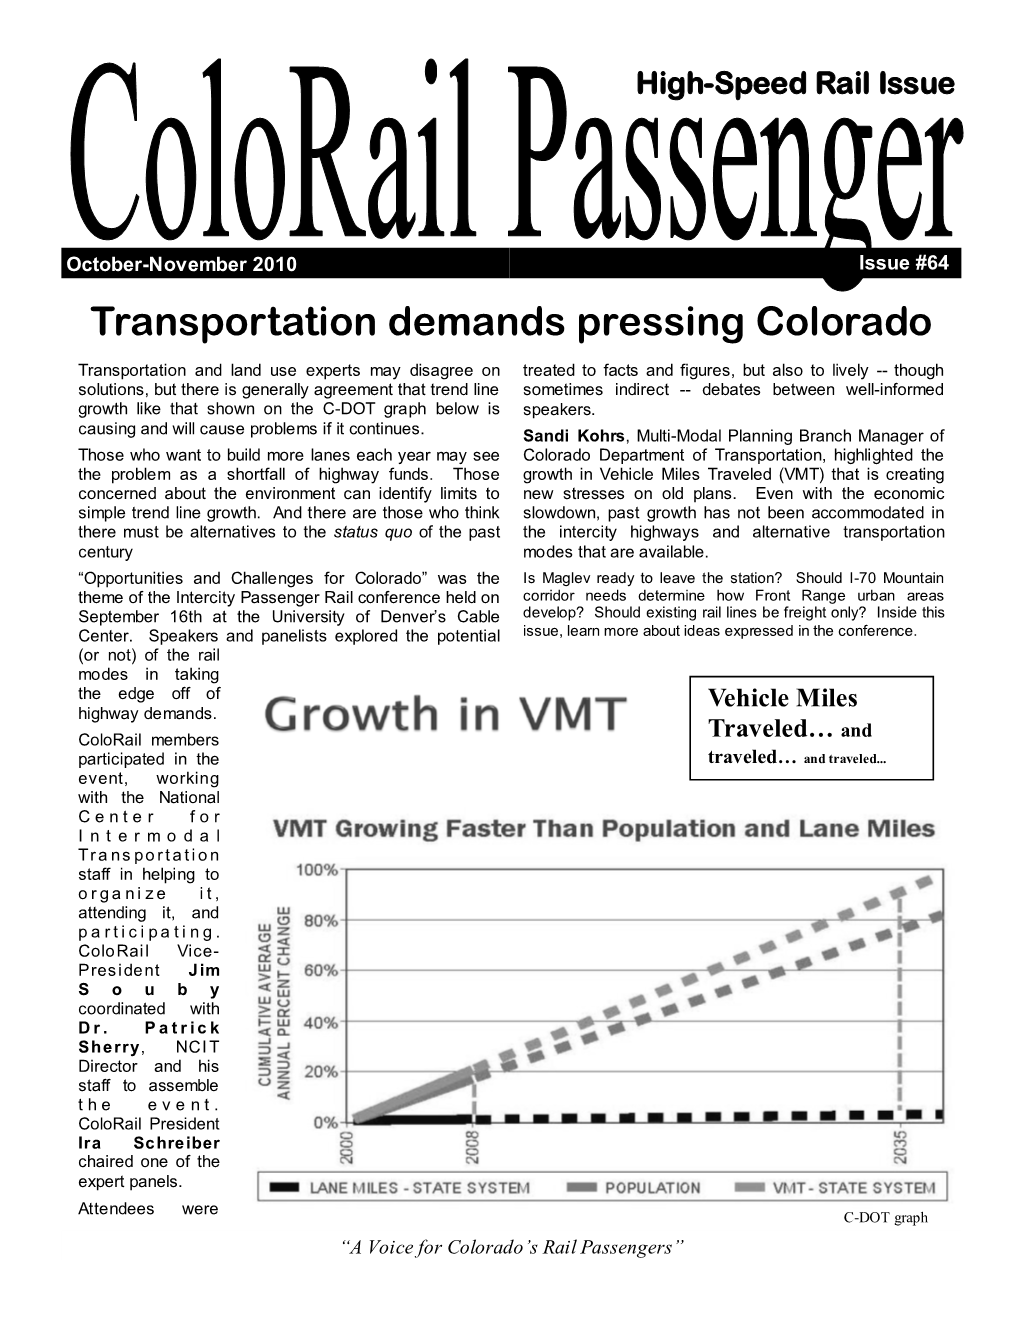 Transportation Demands Pressing Colorado